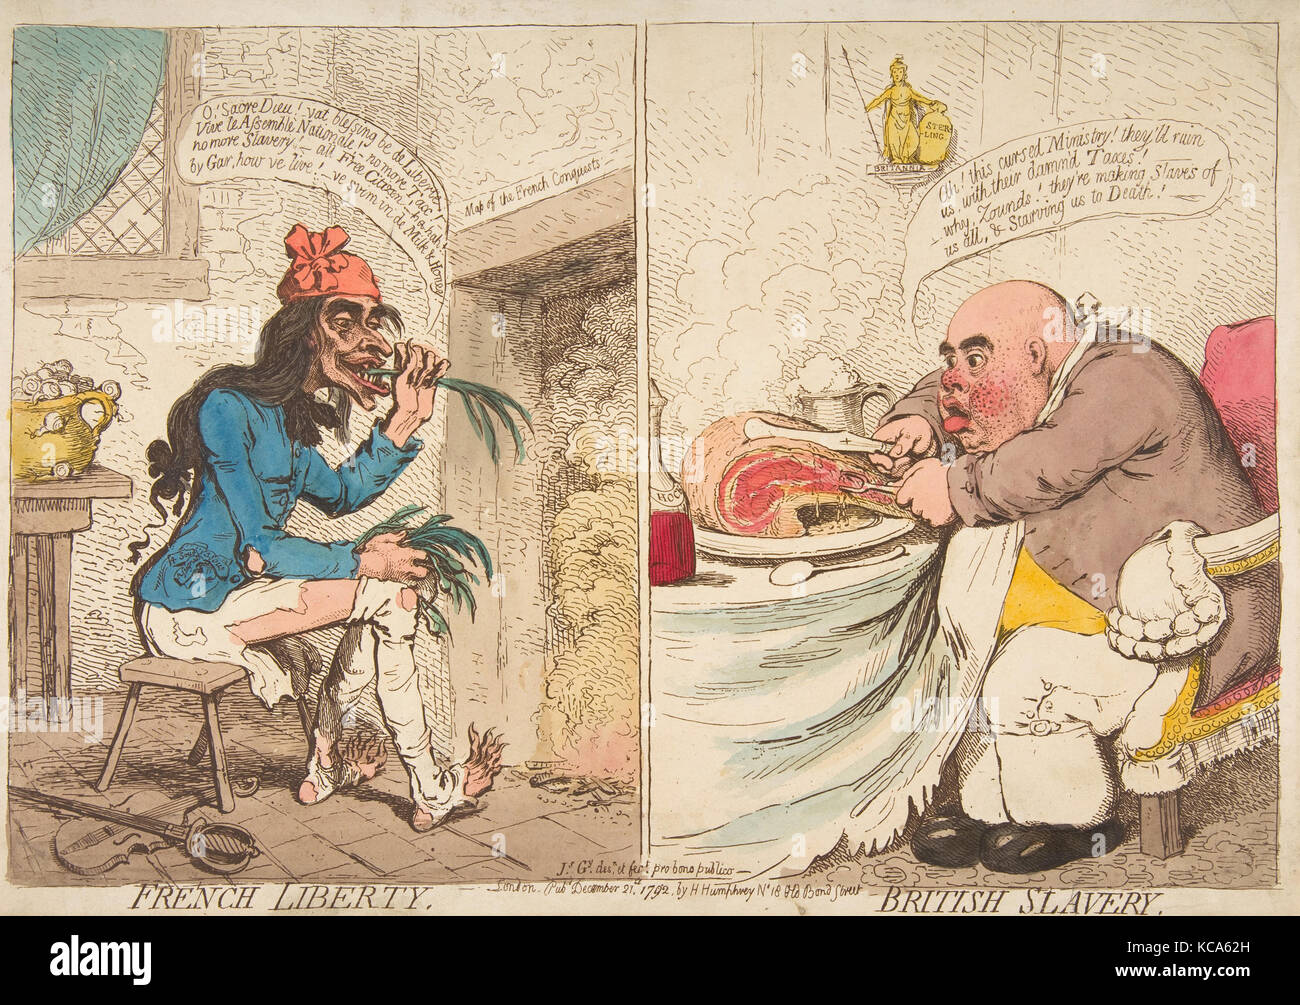 French Liberty – British Slavery, James Gillray, December 21, 1792 Stock Photo